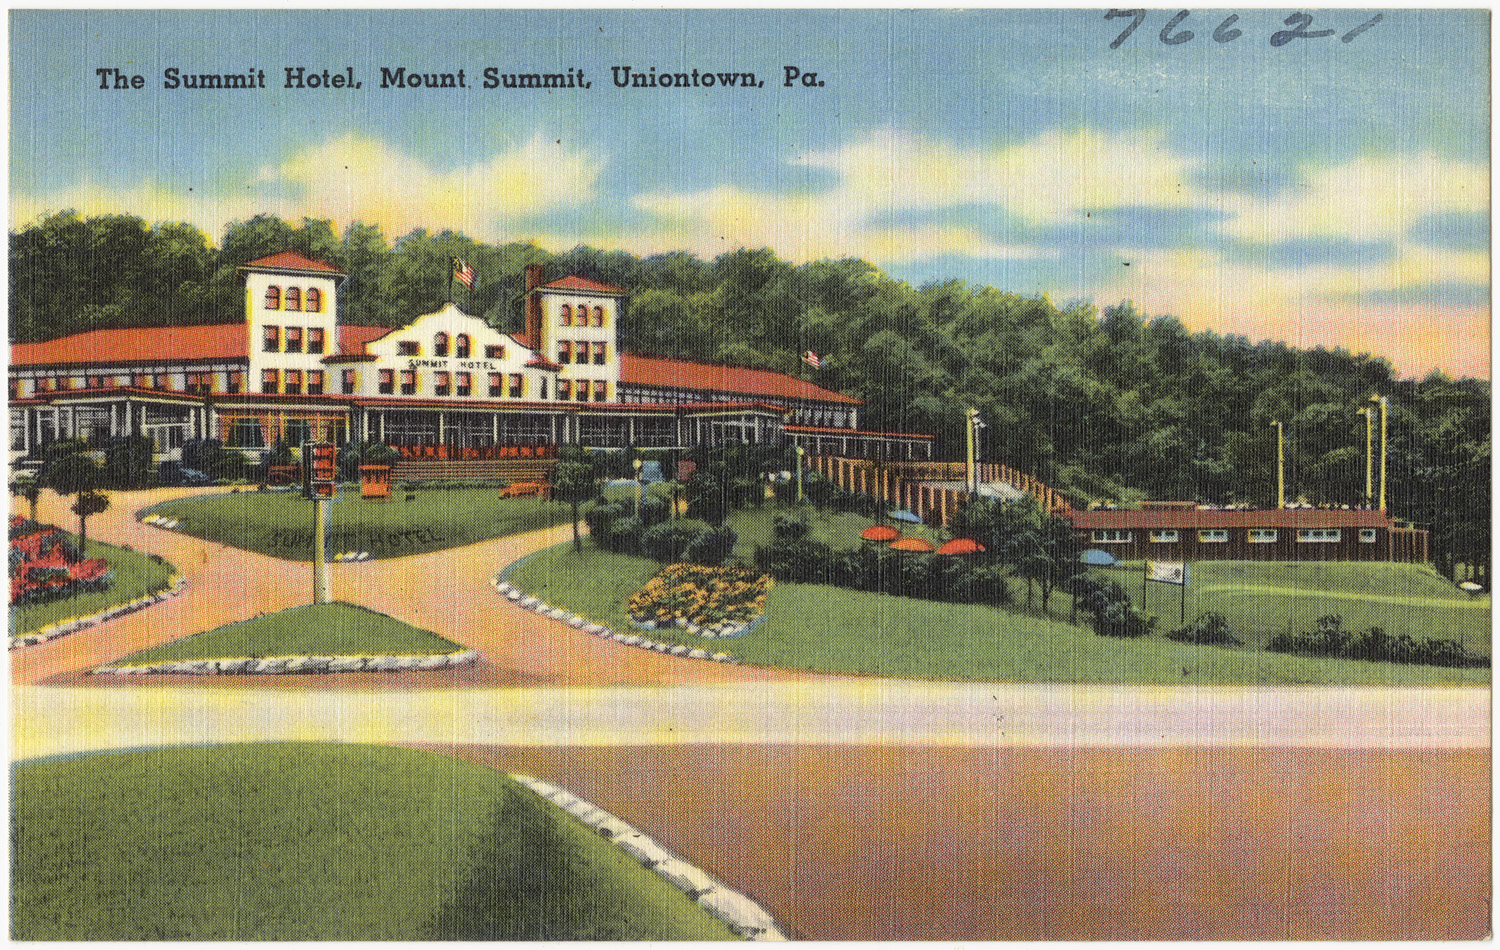 an old postcard depicting the savannah el in savannah, florida